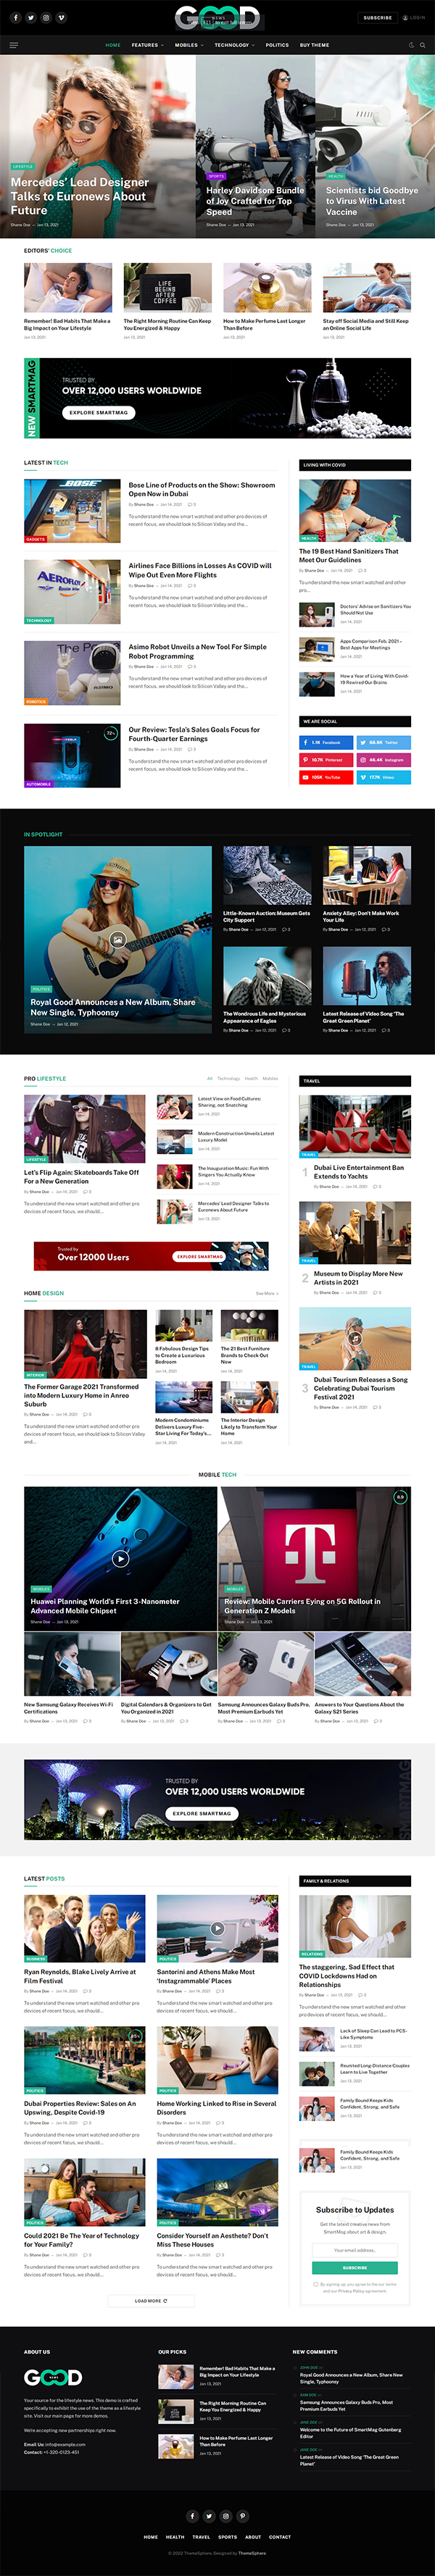 SmartMag - News & Magazine WordPress